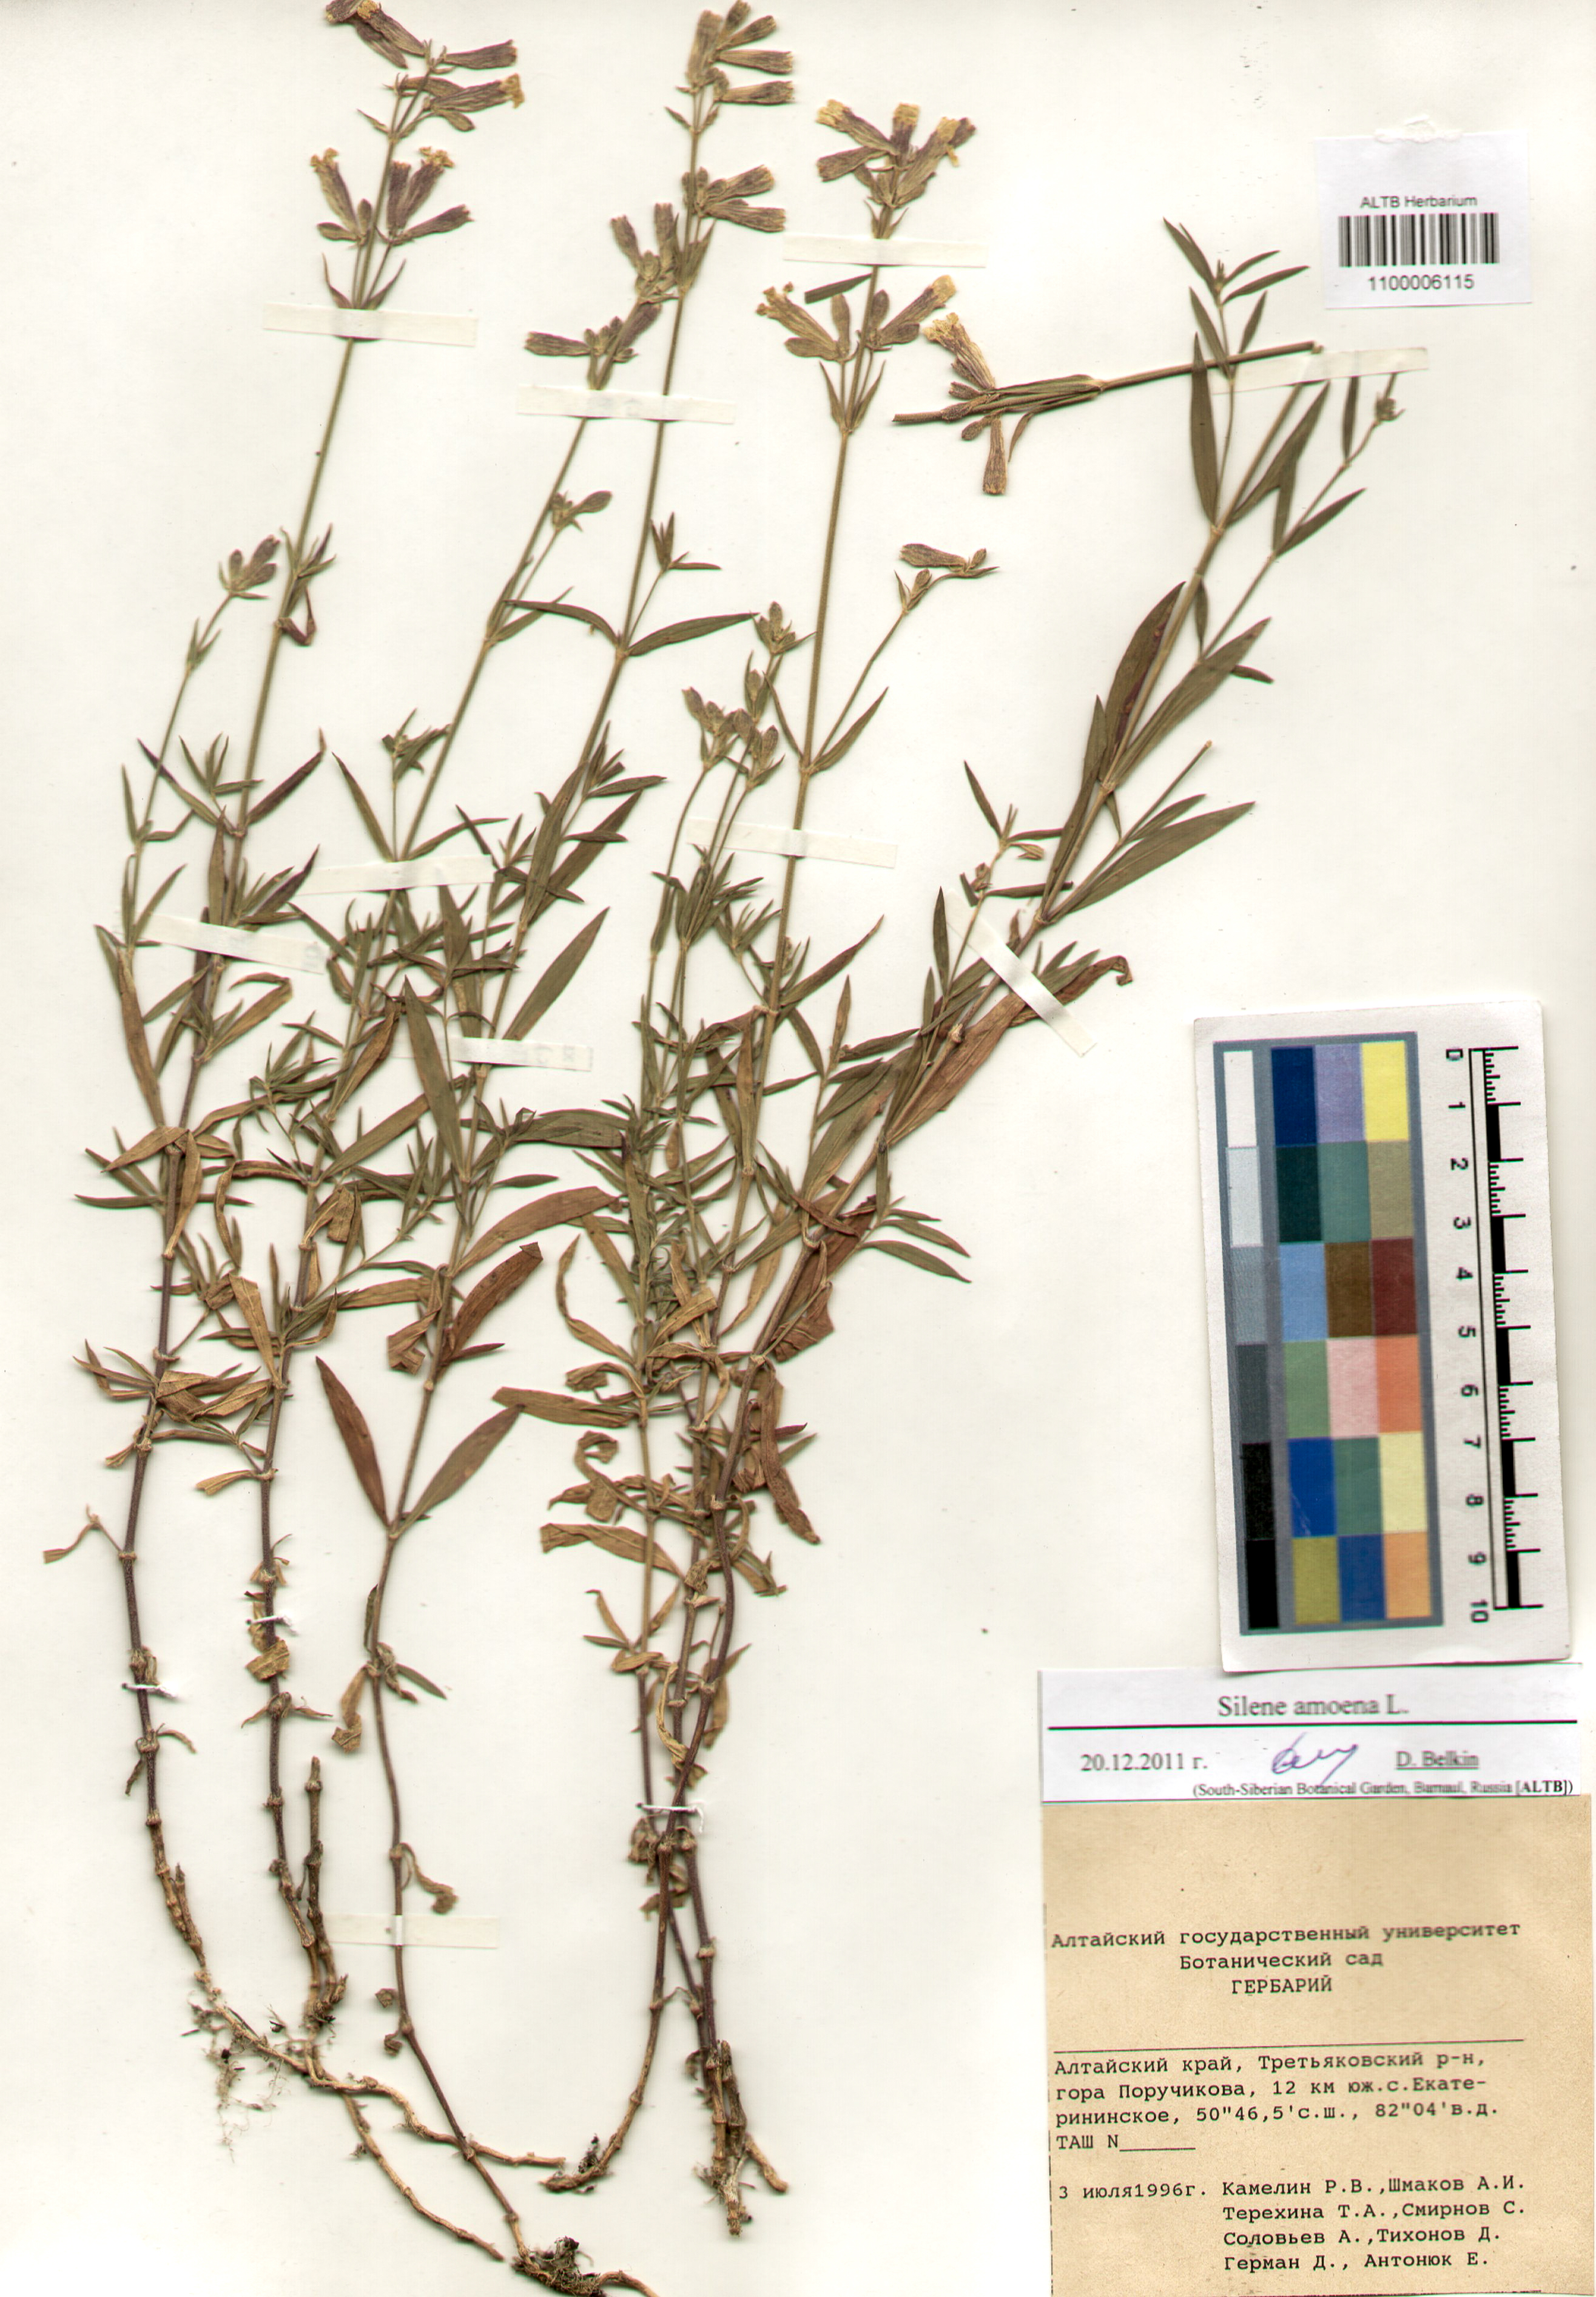 Caryophyllaceae,Silene amoena L.